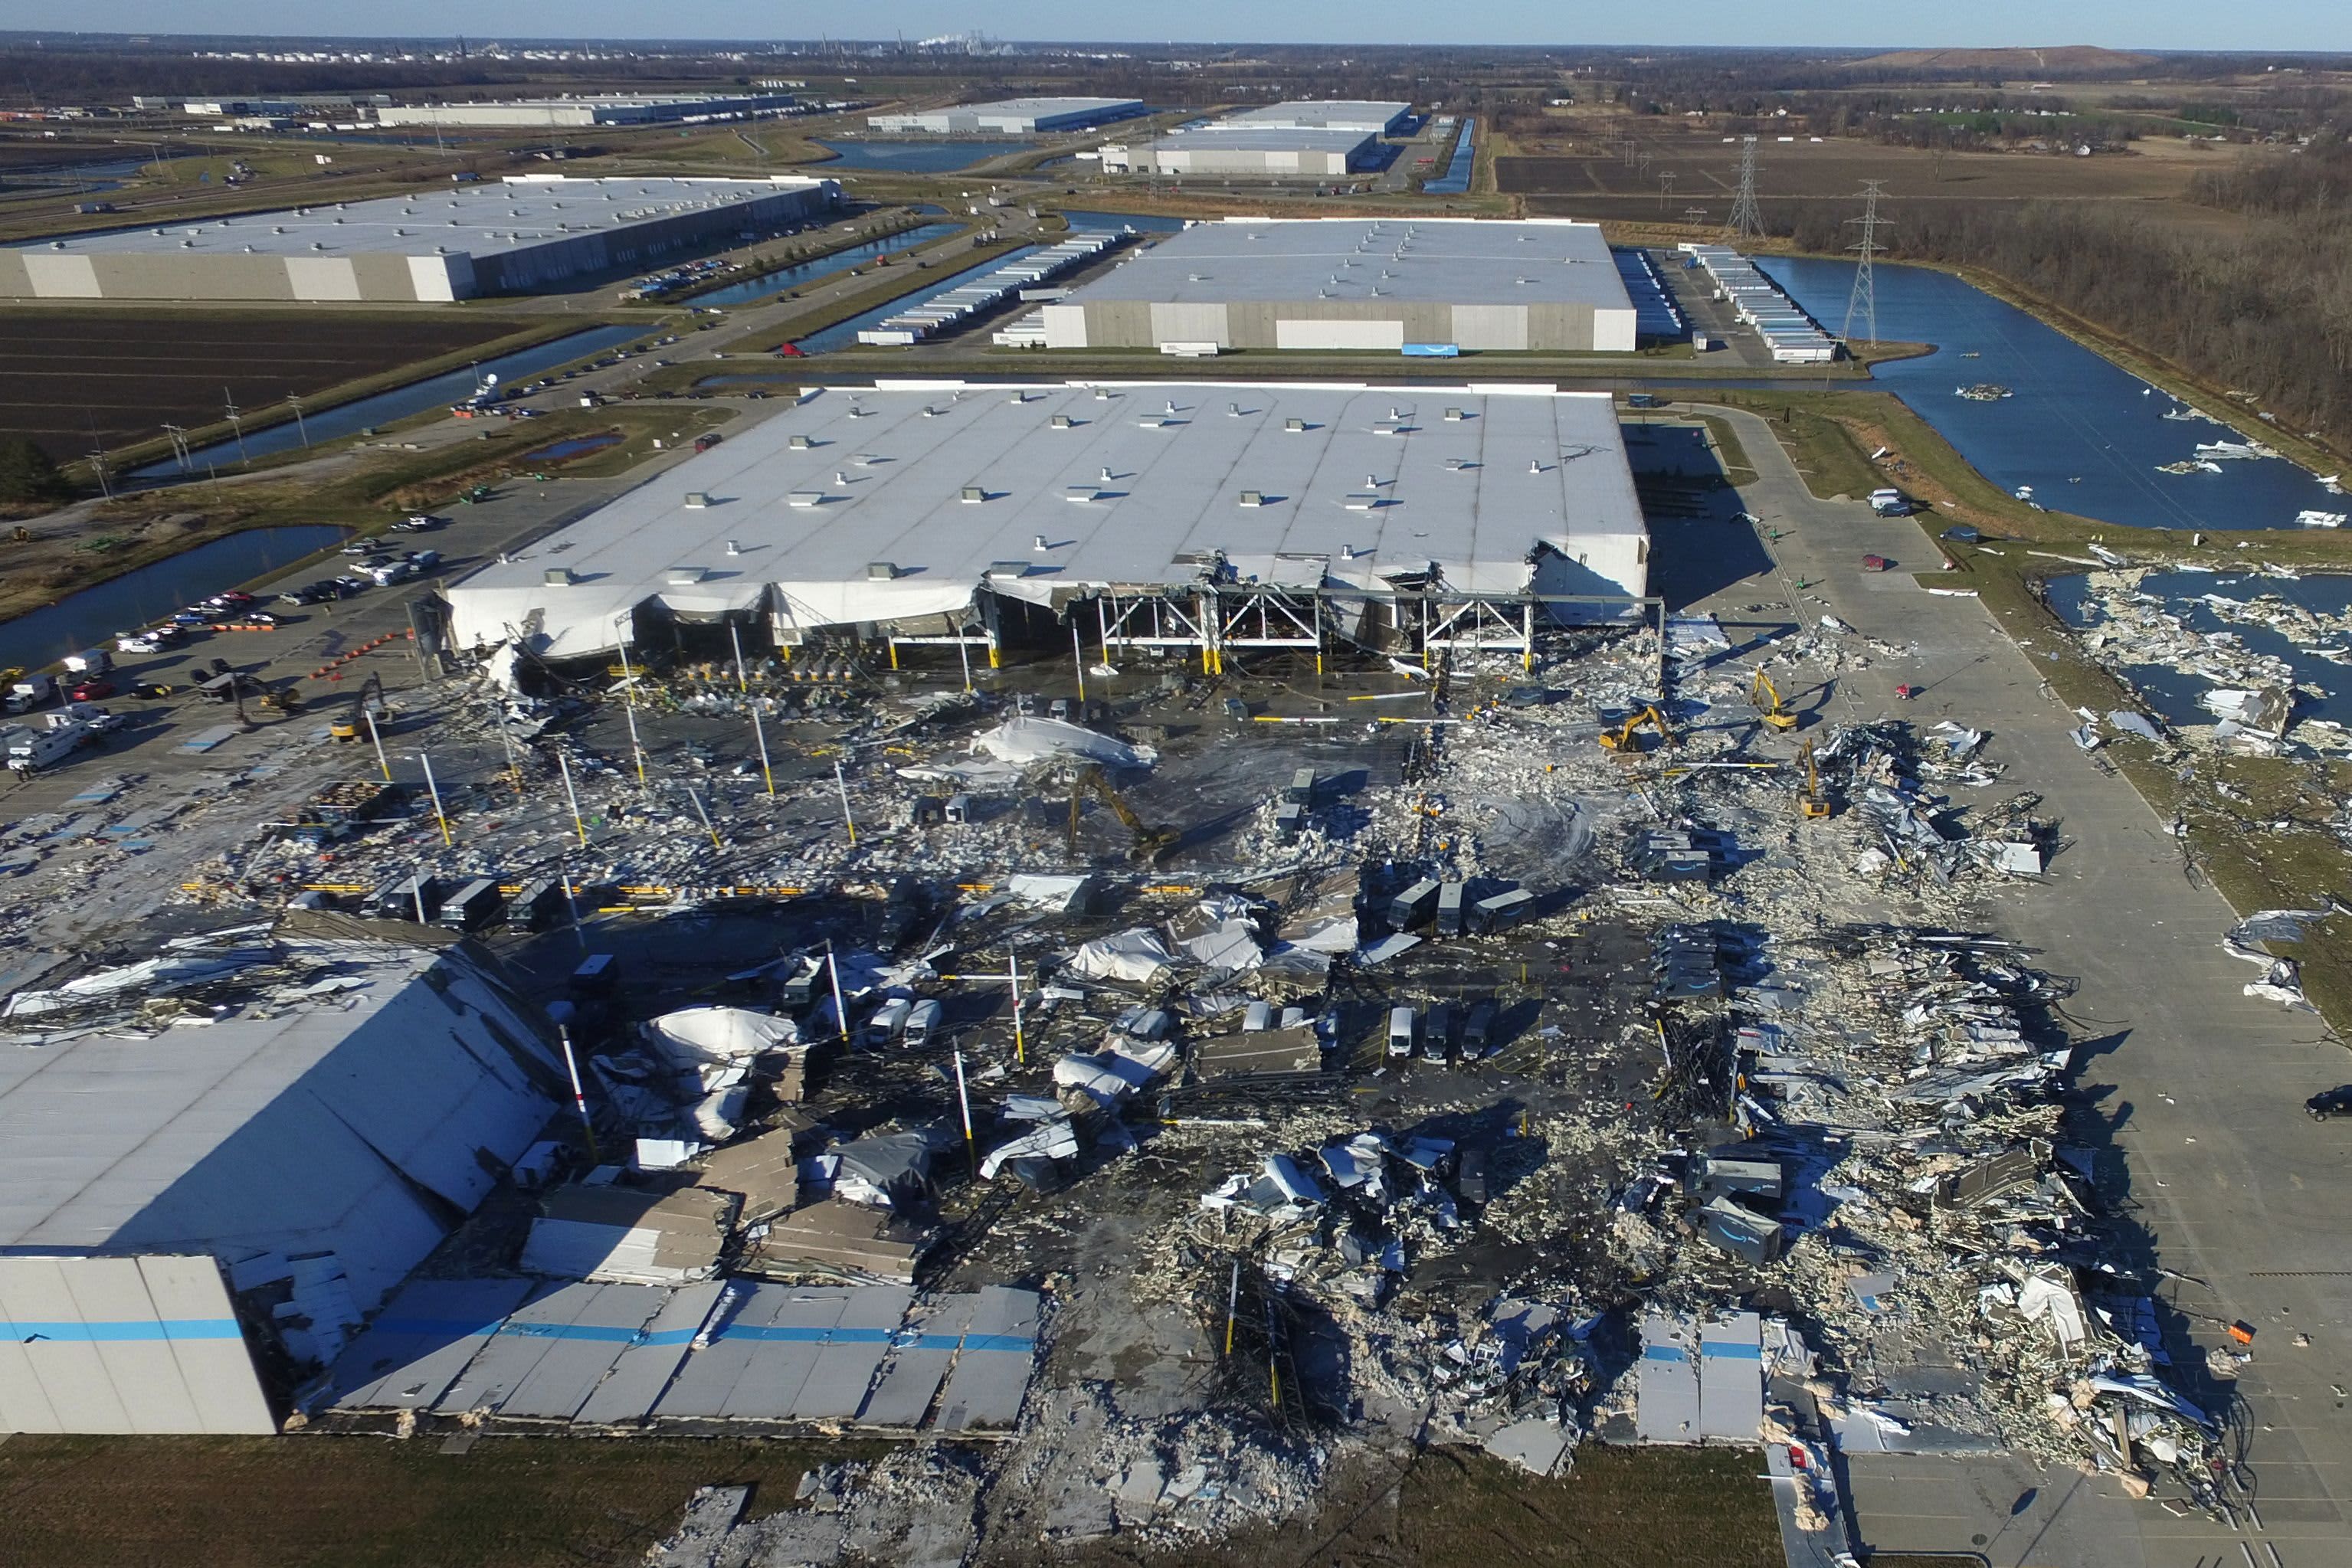 Amazon warehouse in Illinois hit by tornado, killing 6